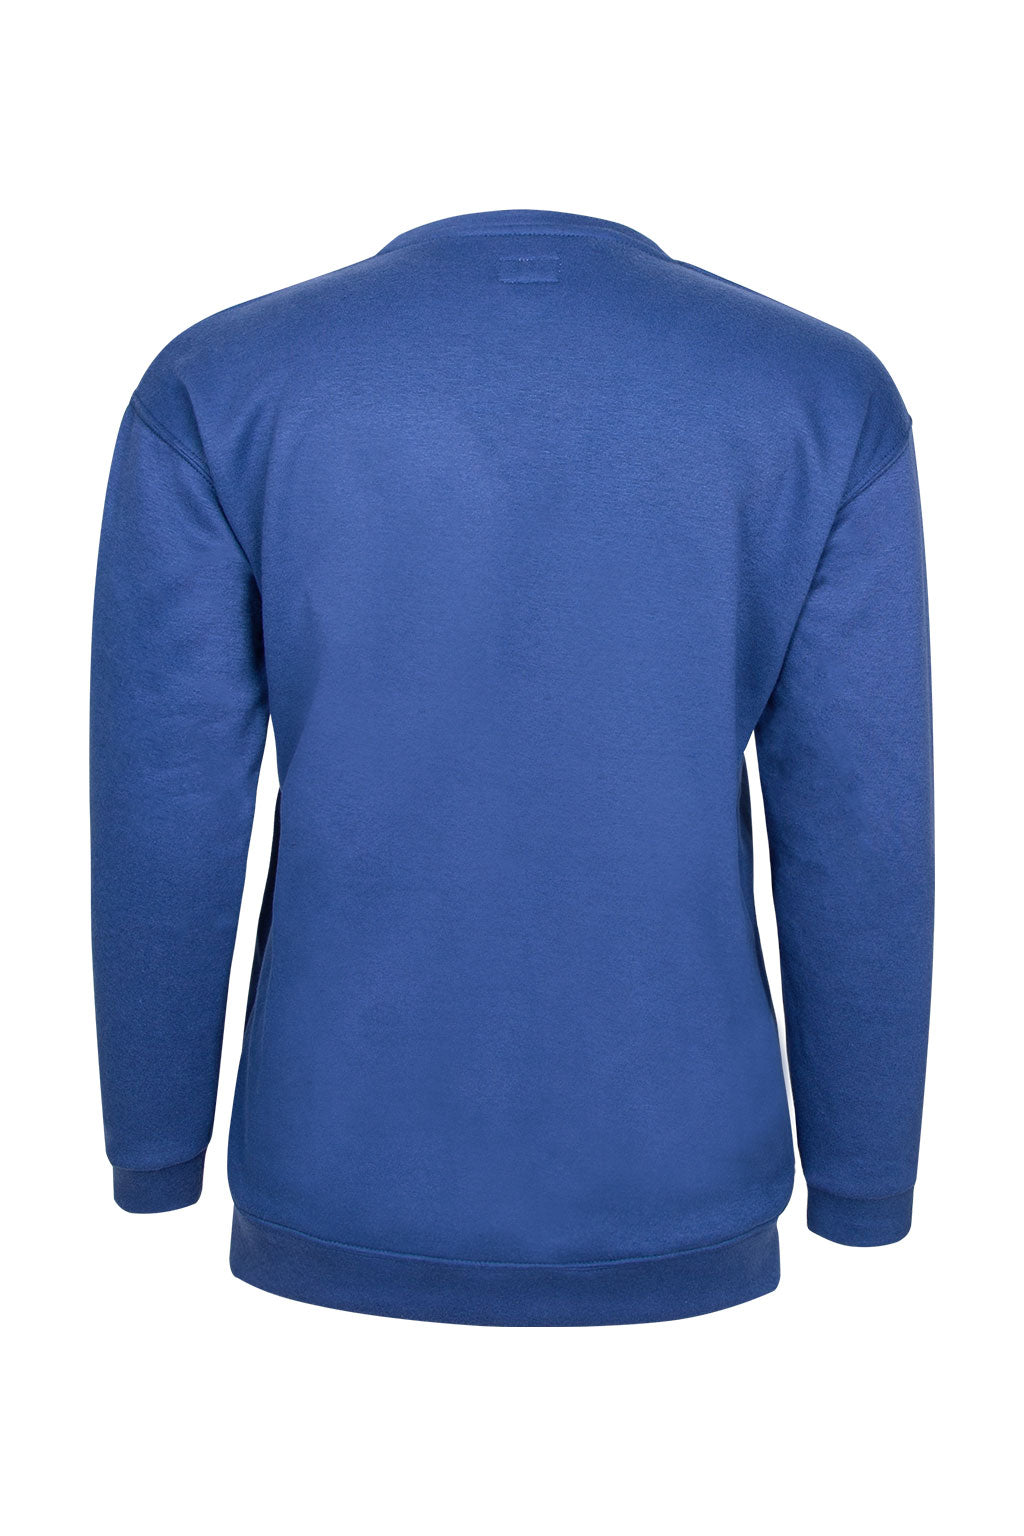 Petrol Blue Sweatshirt